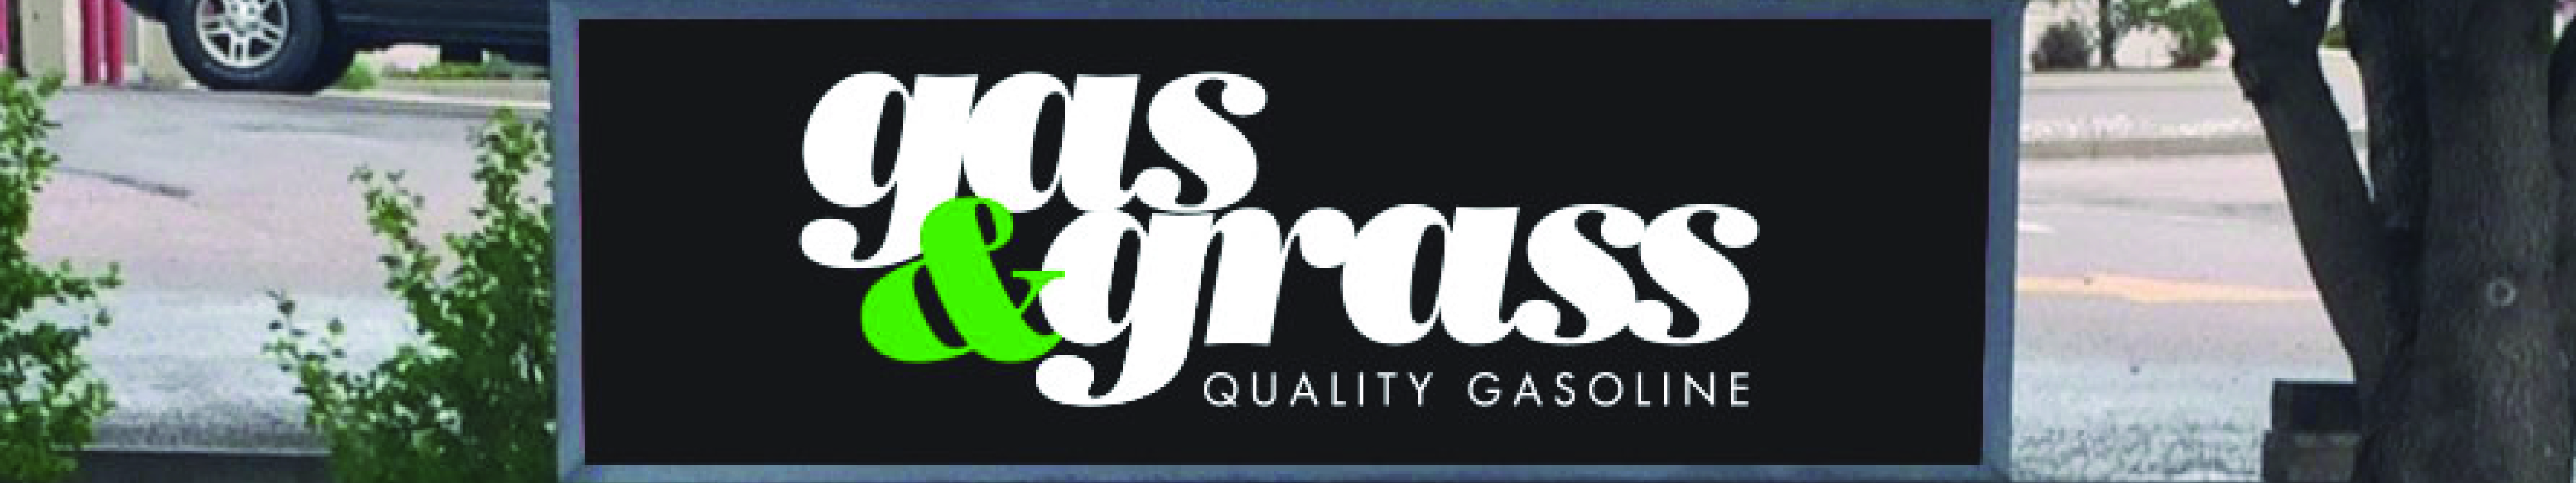 Academy Gas & Grassstore image